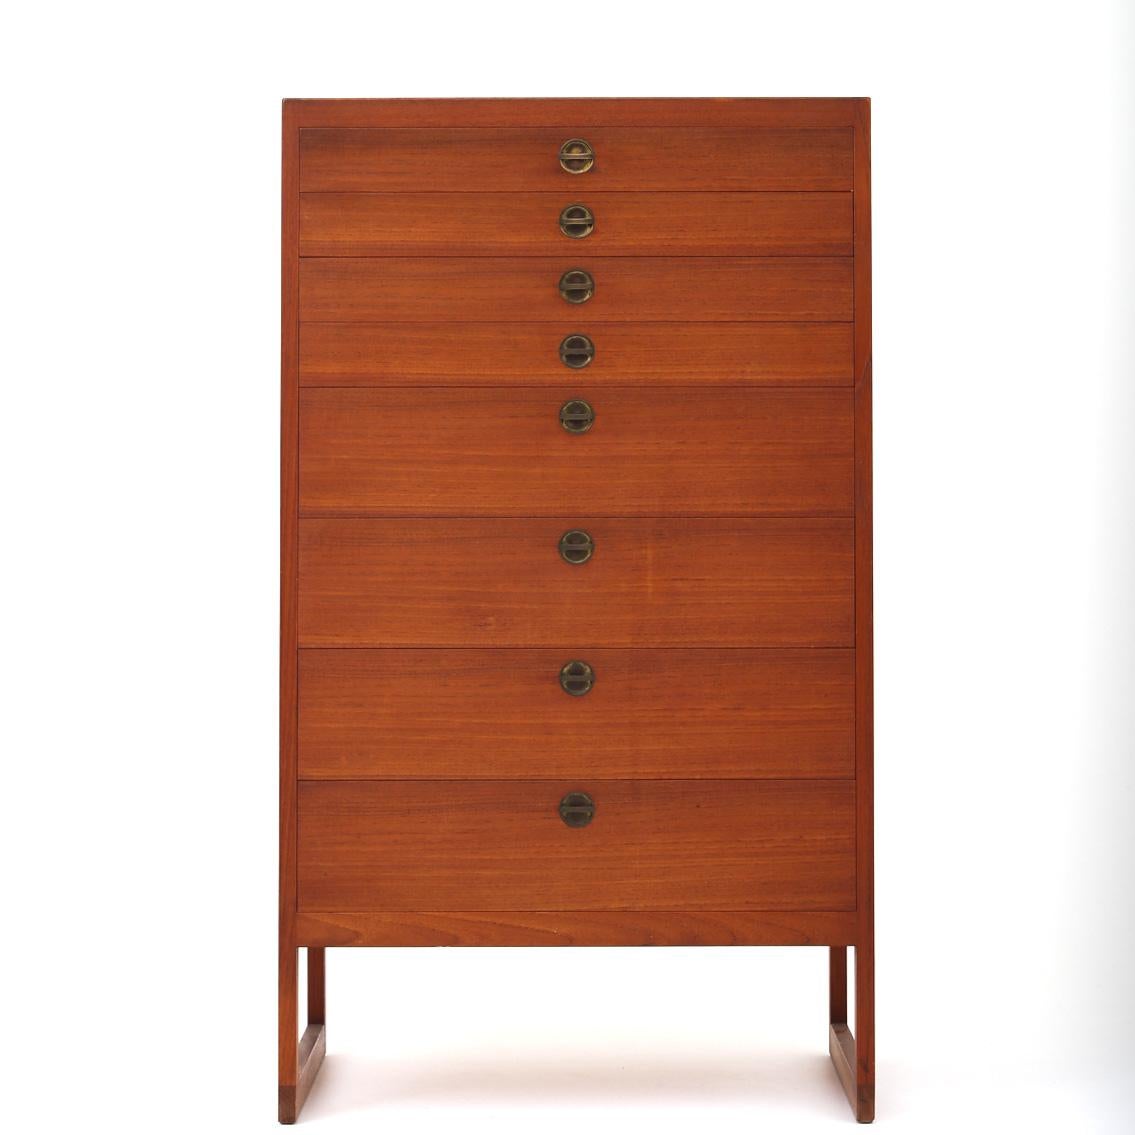 Børge Mogensen / P. Lauritsen & Son. BM 64 - 'Tallboy' chest of drawers in teak with eight drawers.